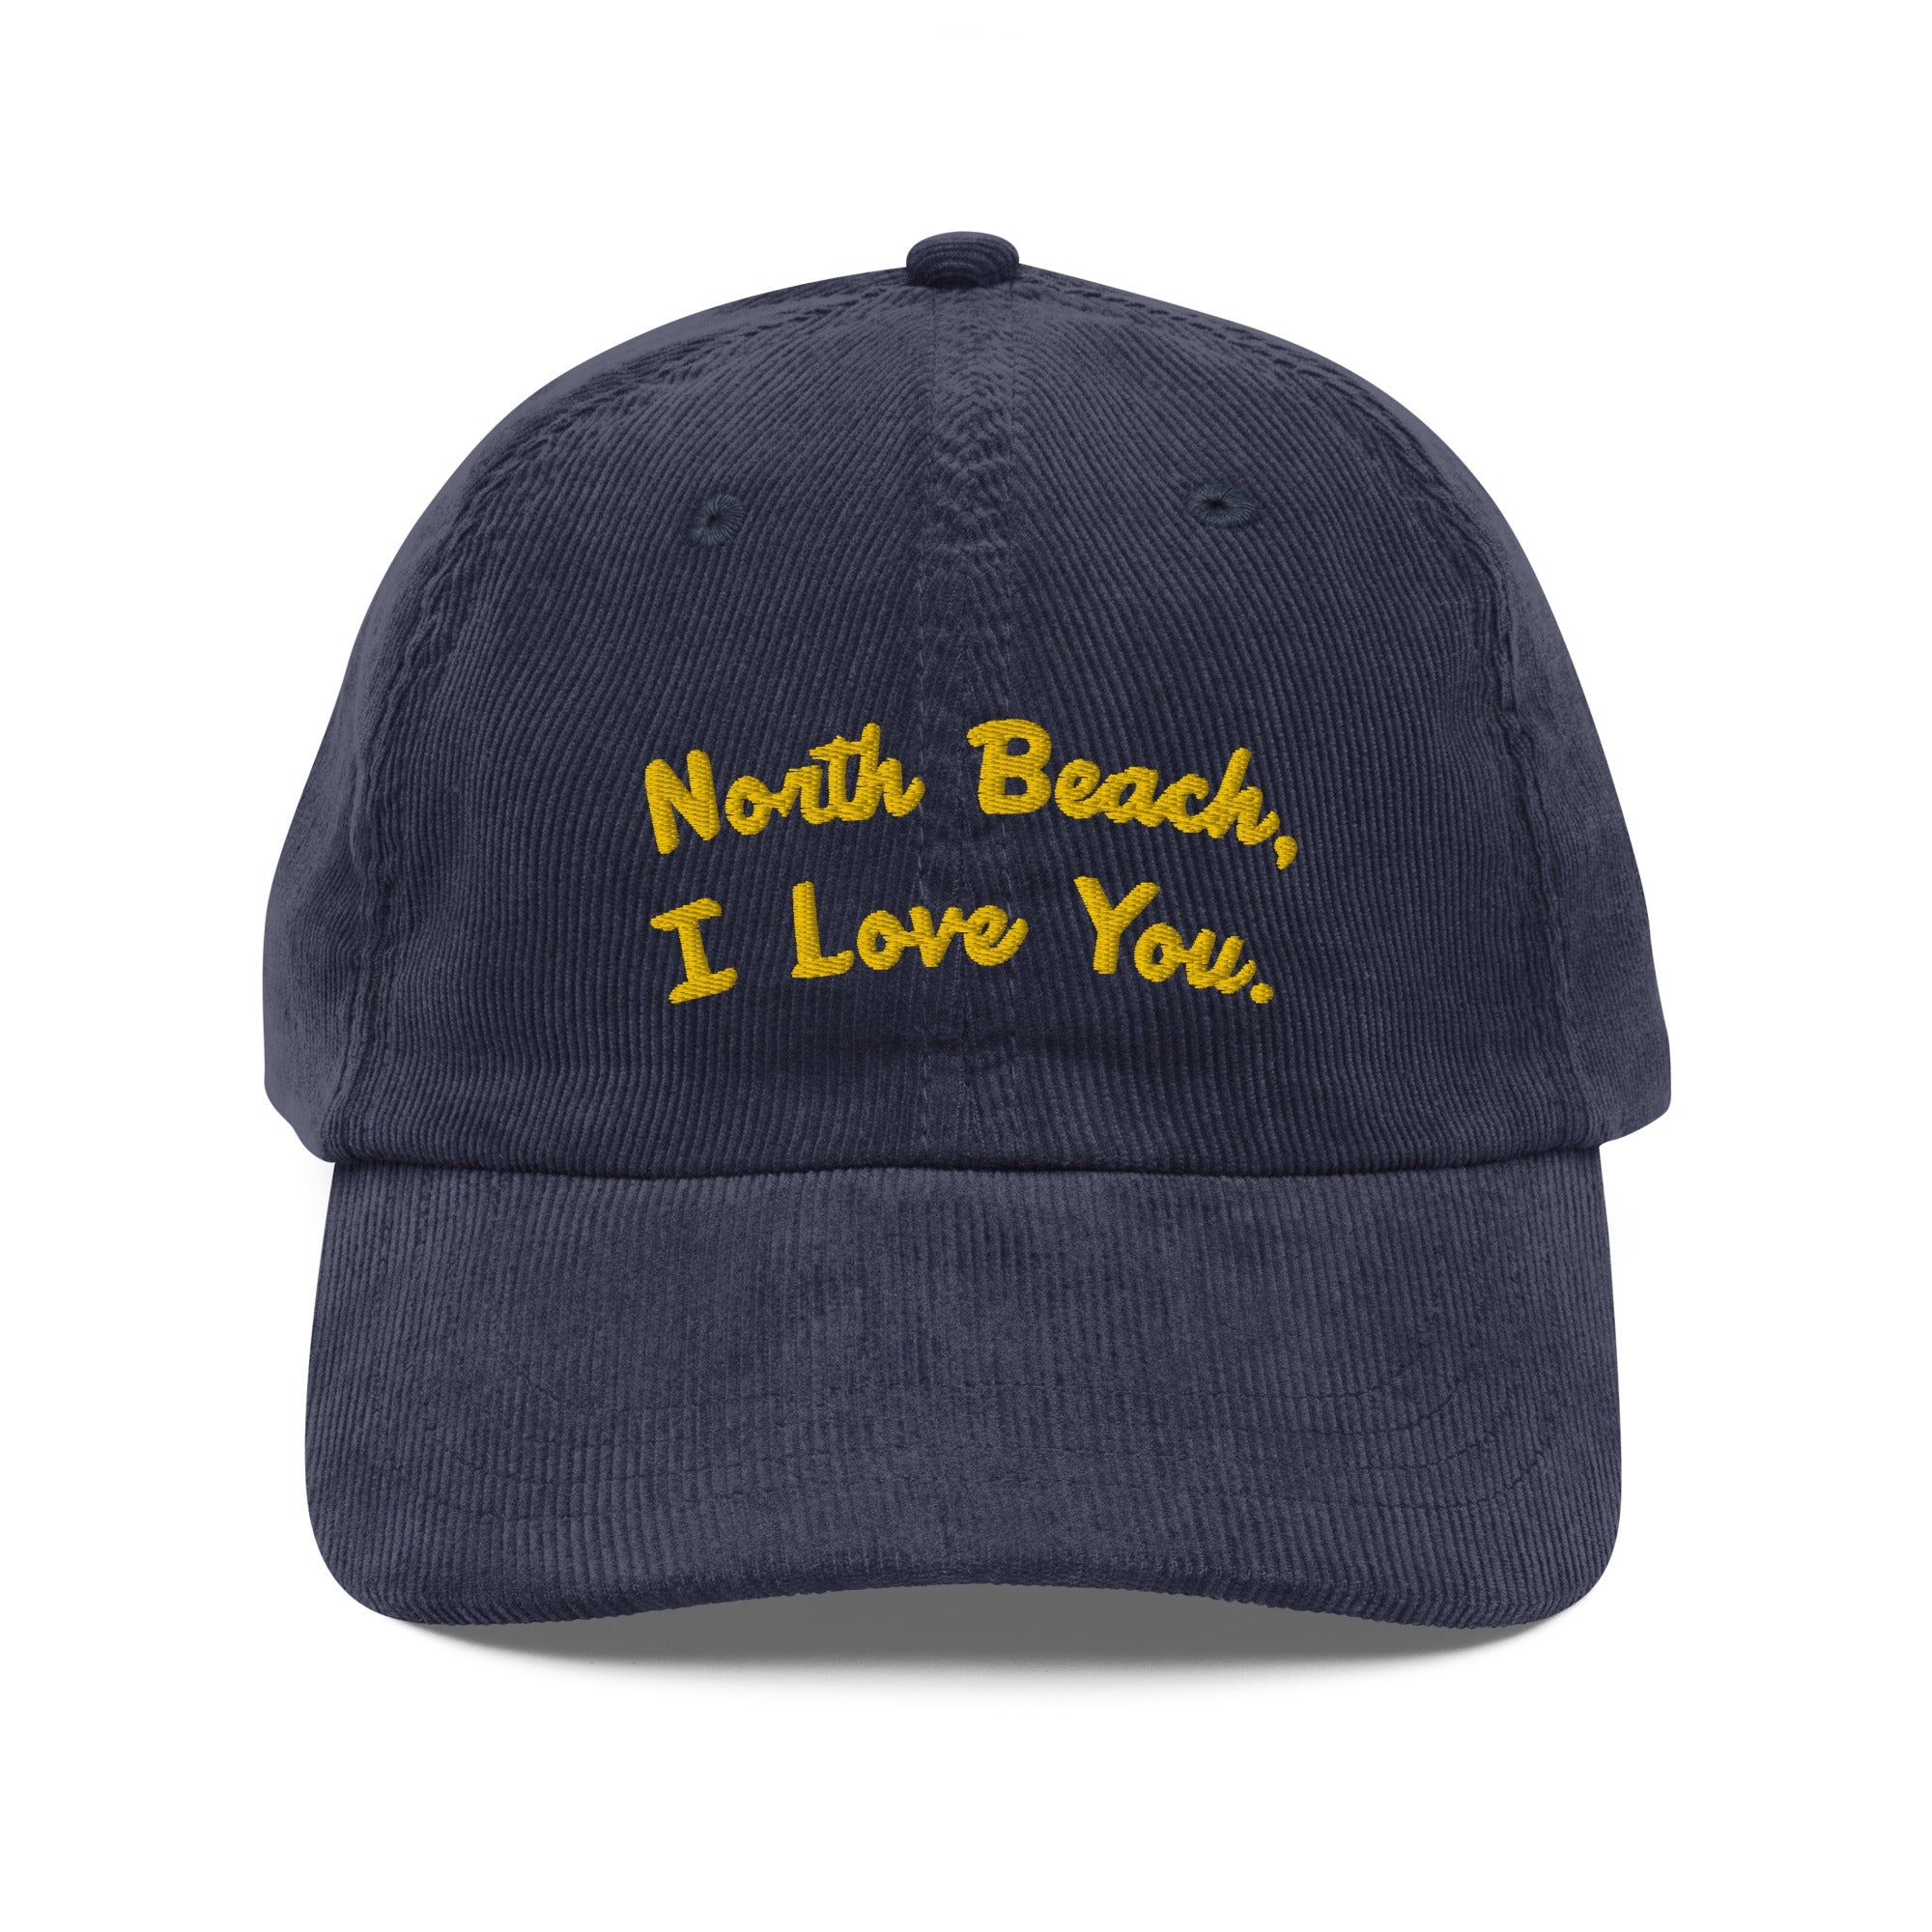 I Love You Corduroy Hat - North Beach | San Francisco, CA